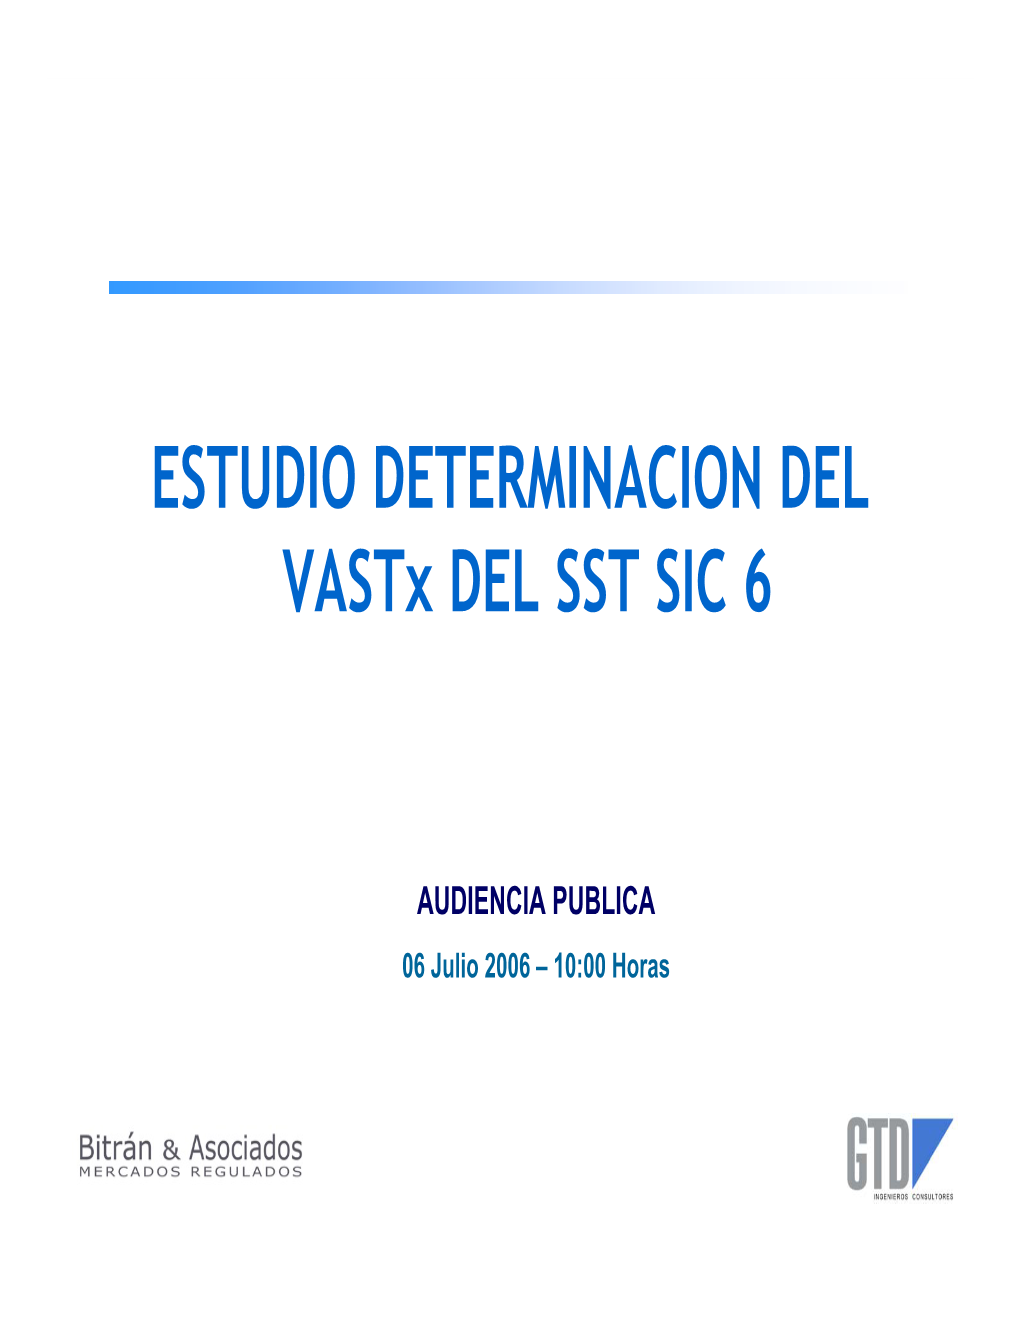 ESTUDIO DETERMINACION DEL Vastx DEL SST SIC 6